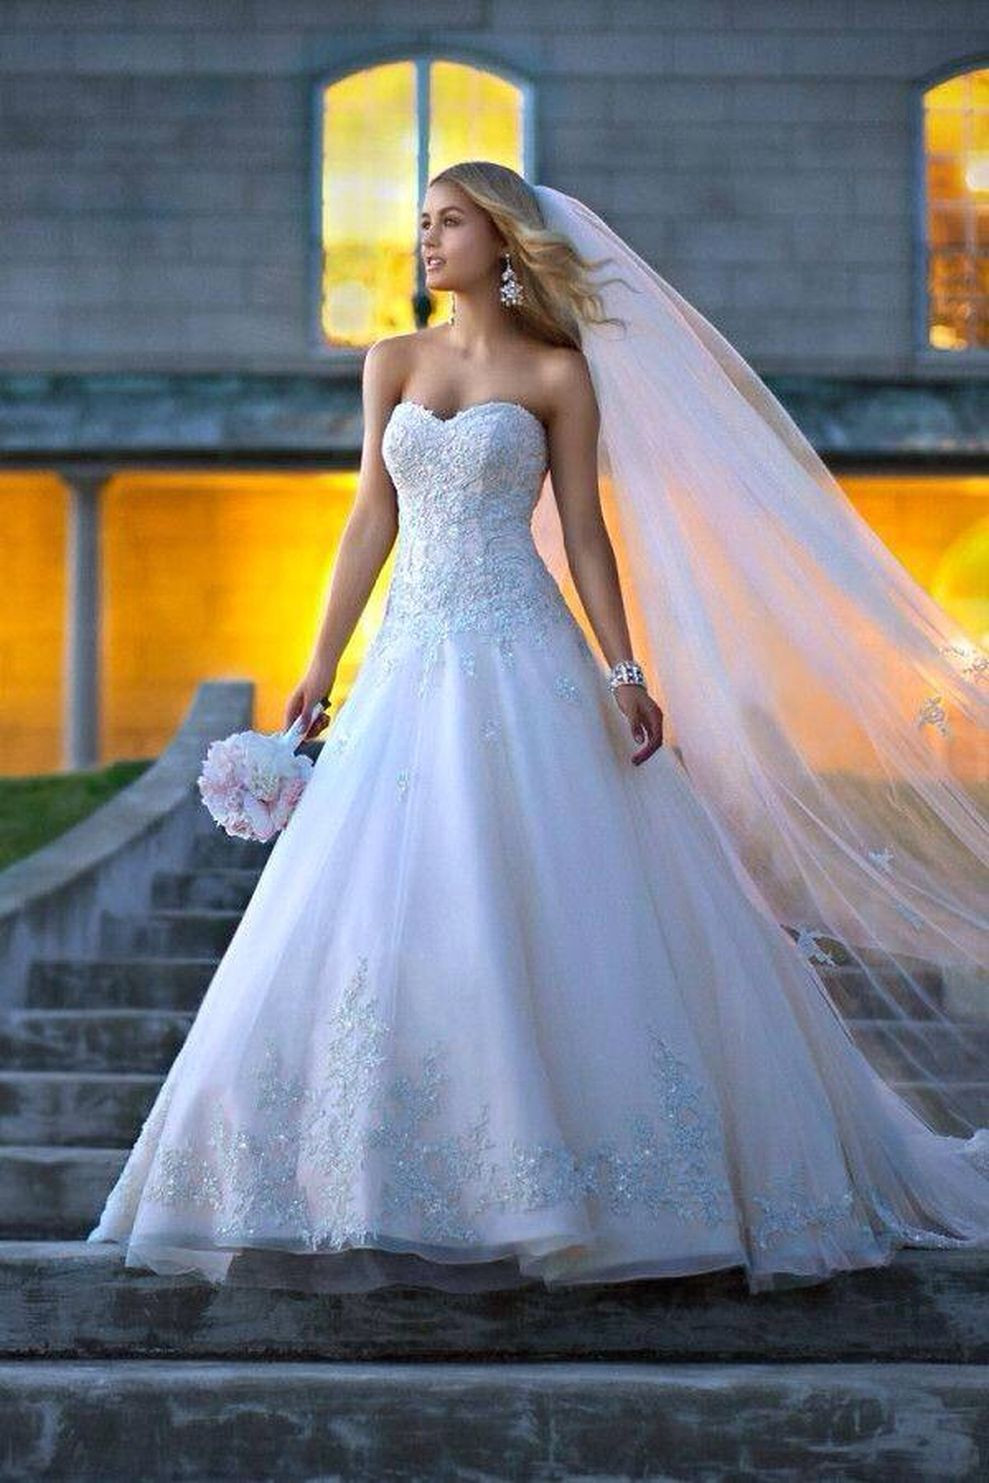 Big Wedding Dresses
 27 Cute and Stunning Big Wedding Dress Ideas VIs Wed